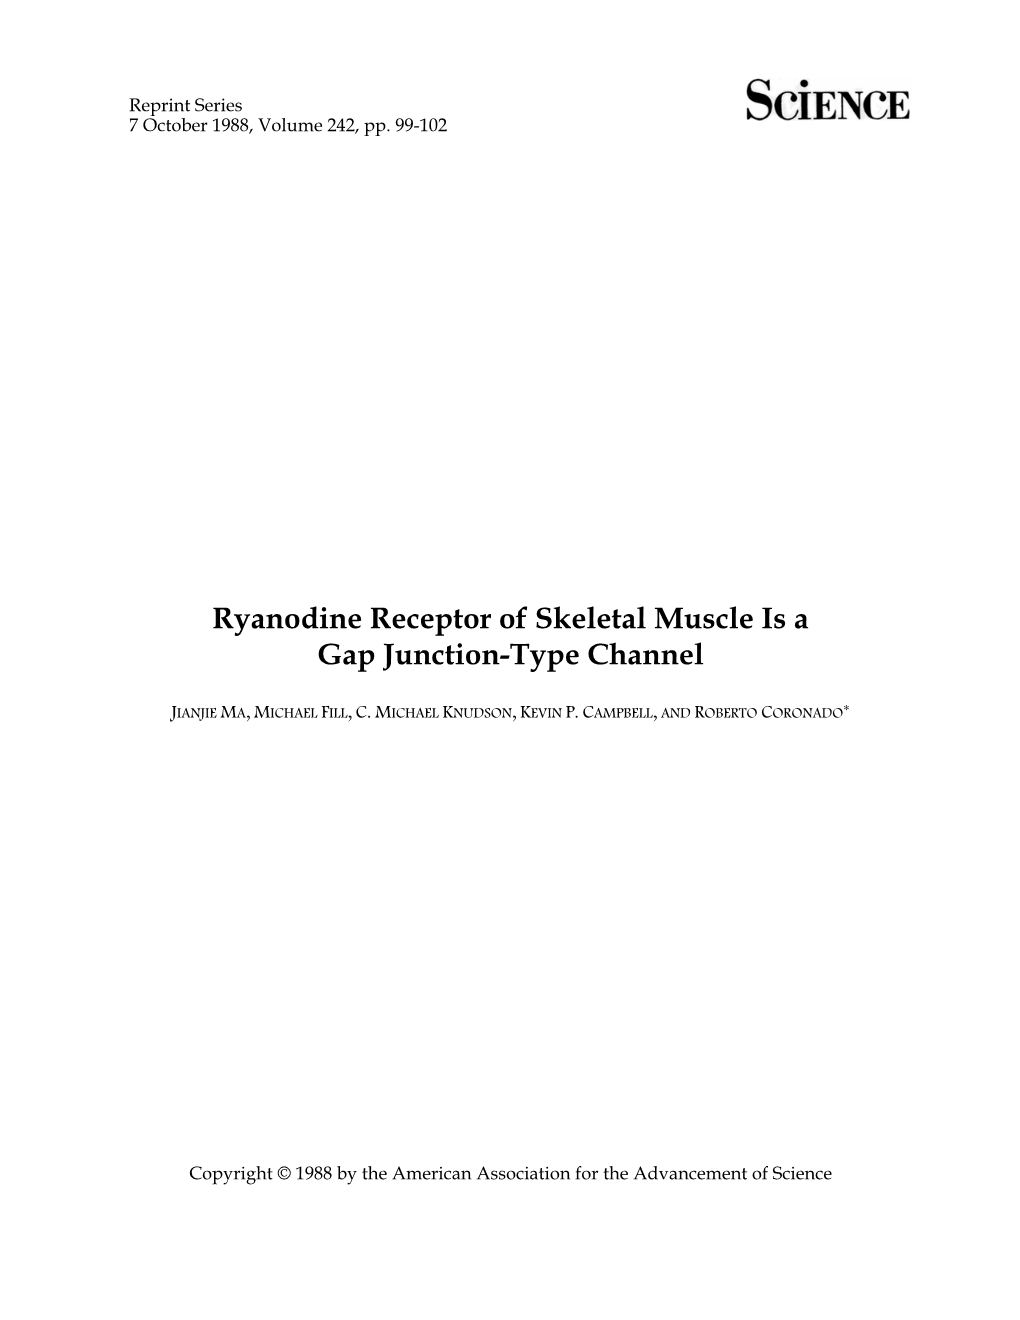 Ryanodine Receptor of Skeletal Muscle Is a Gap Junction-Type Channel